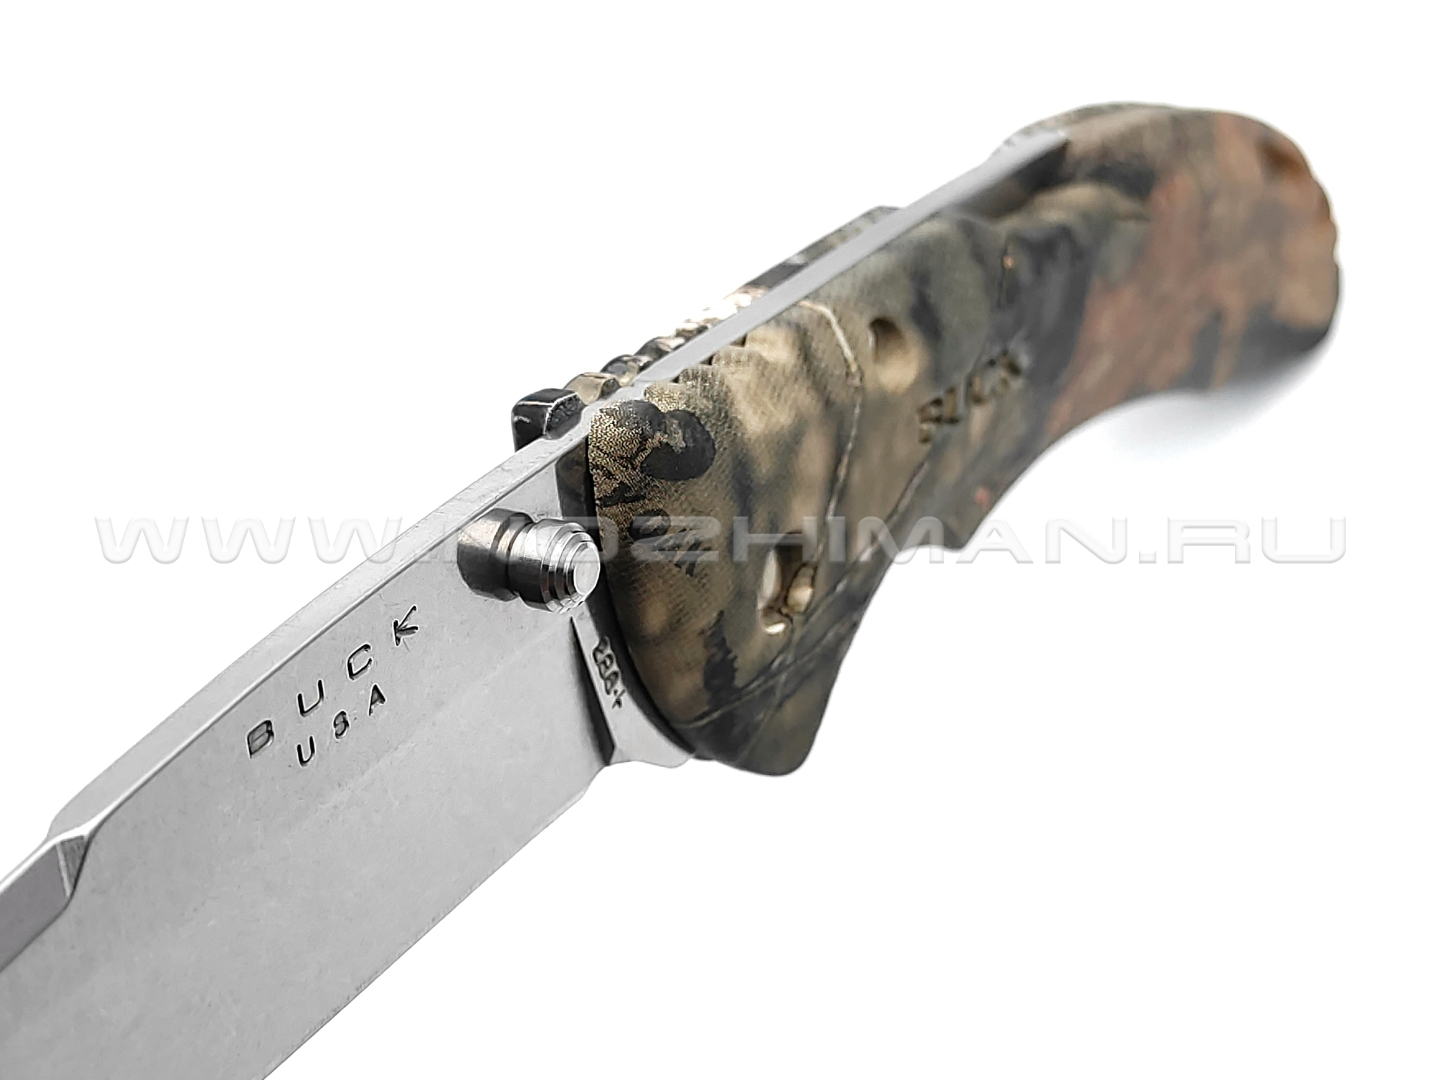 Нож Buck 286 Bantam BHW 0286CMS24 сталь 420HC рукоять GRN Mossy Oak Country Camo